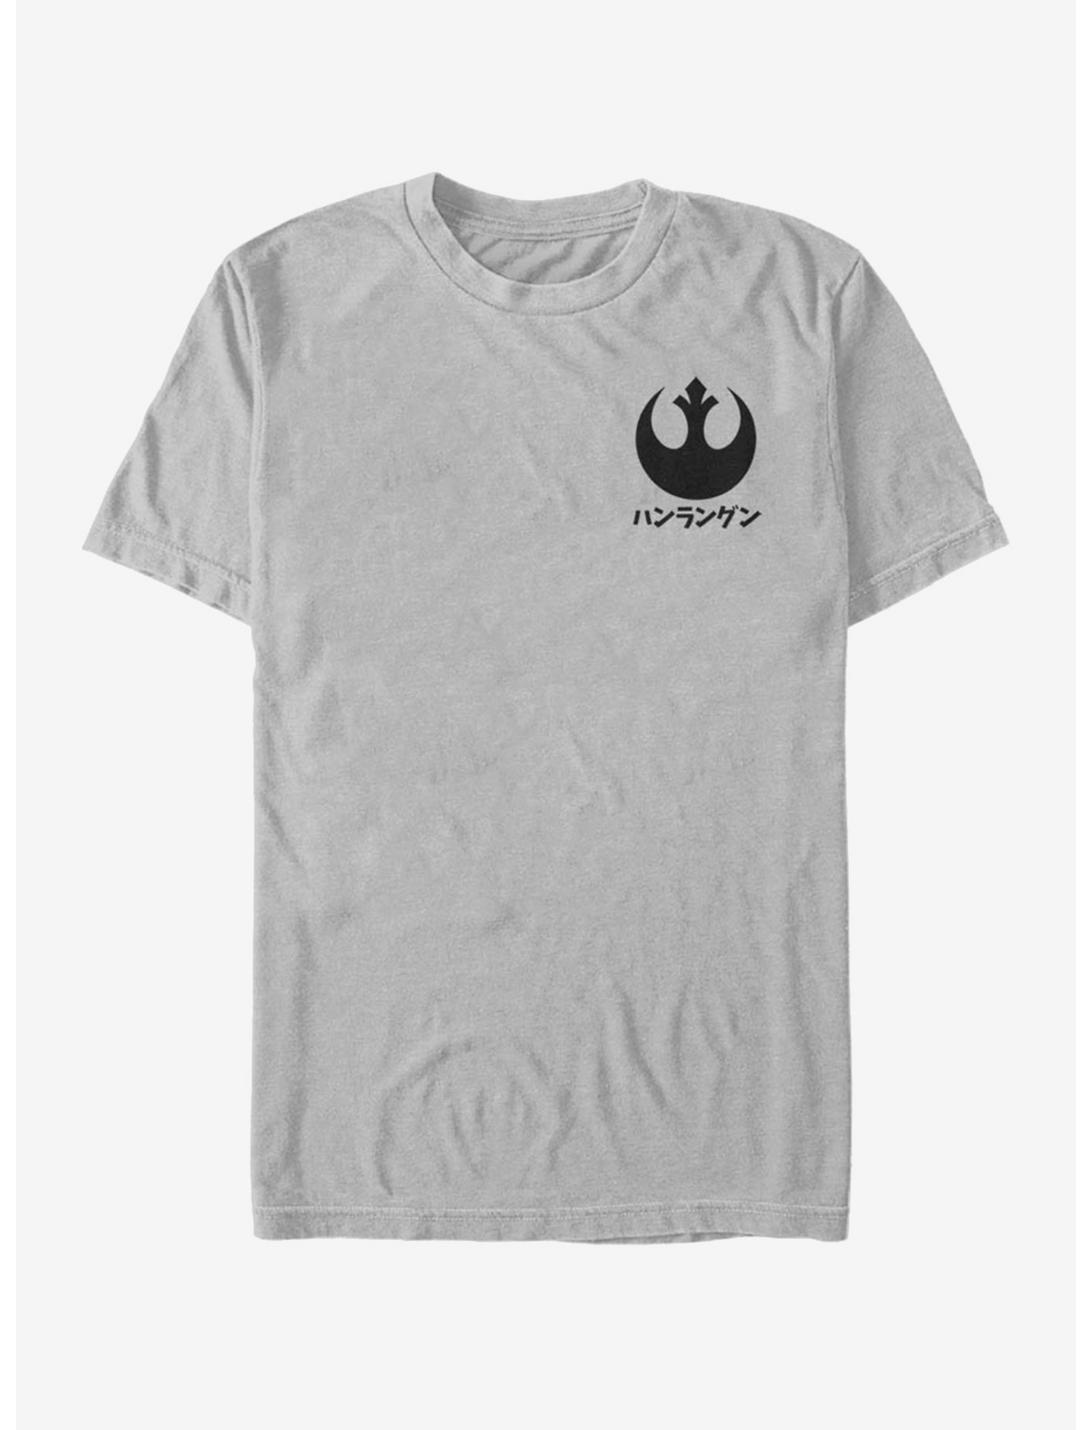 Star Wars Hanrangen T-Shirt, SILVER, hi-res